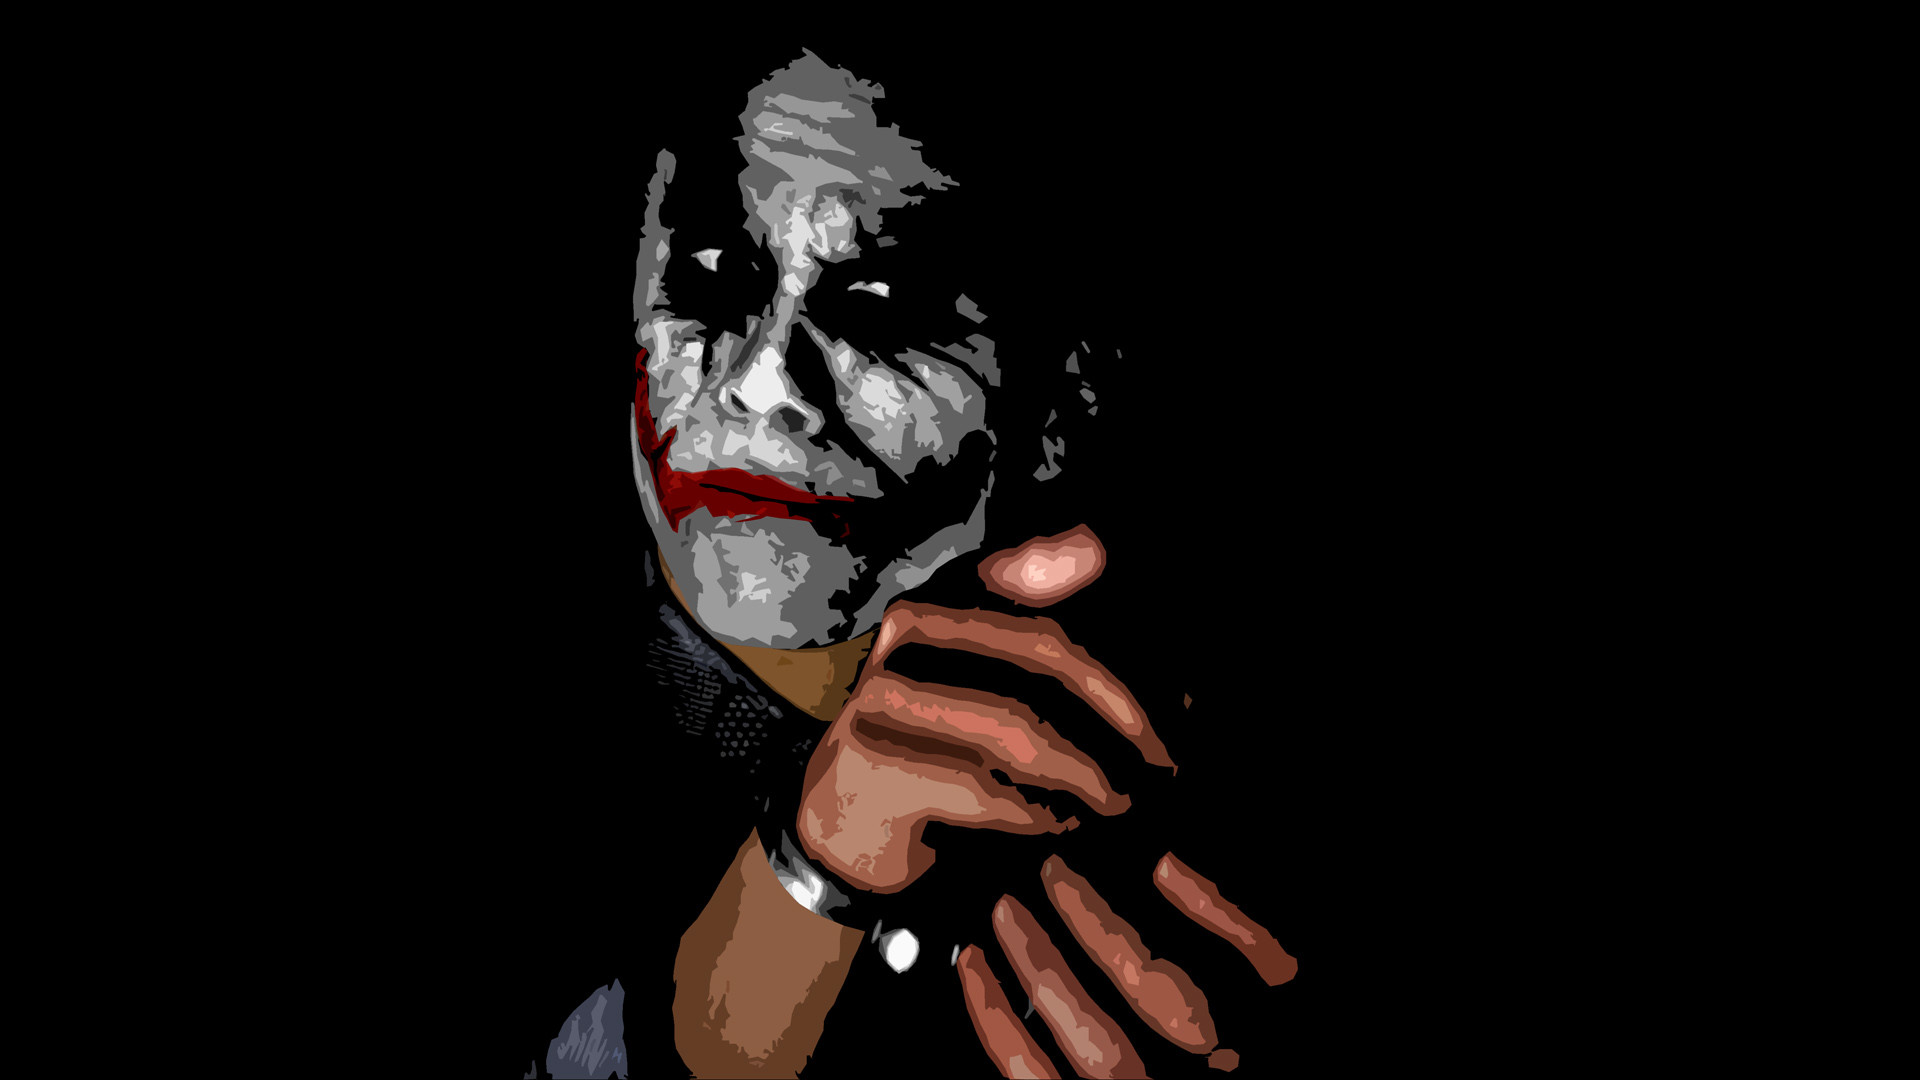 1920x1080 Heath Ledger Joker Wallpaper HD - WallpaperSafari | #ICU | Pinterest | Heath  ledger joker wallpaper, Heath ledger joker and Heath ledger